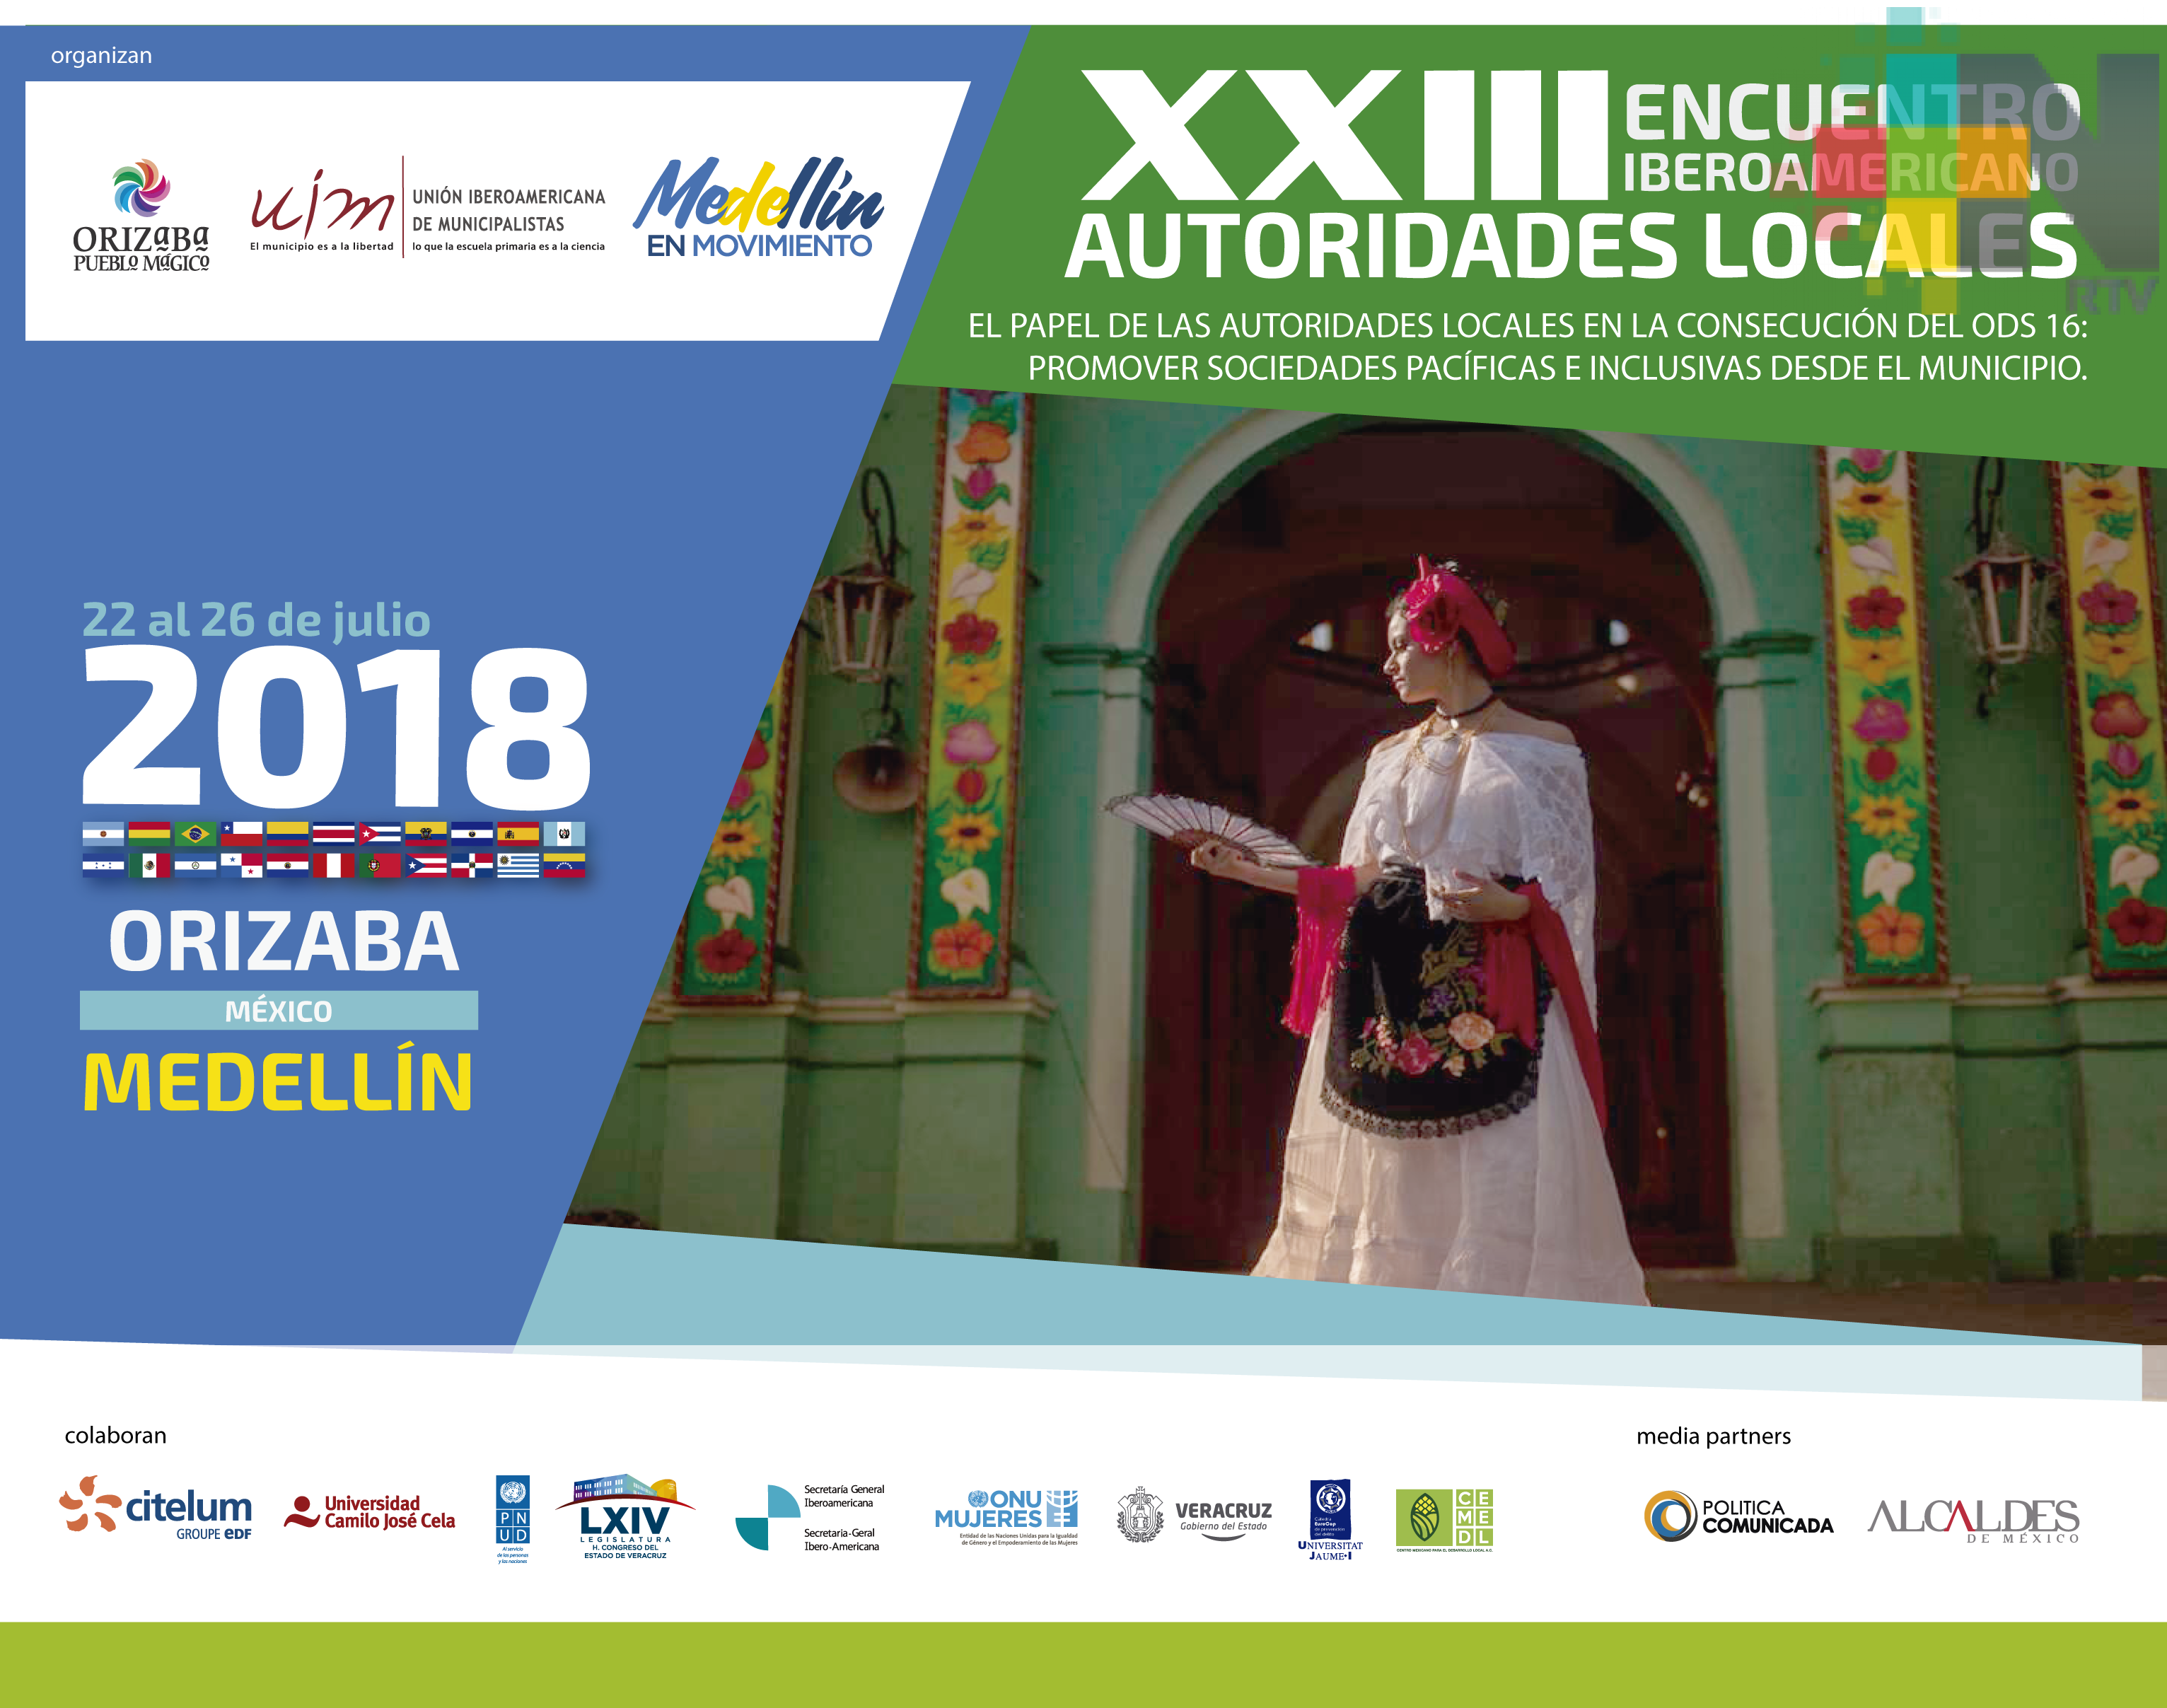 Invitan al XXIII Encuentro Iberoamericano de Autoridades Locales